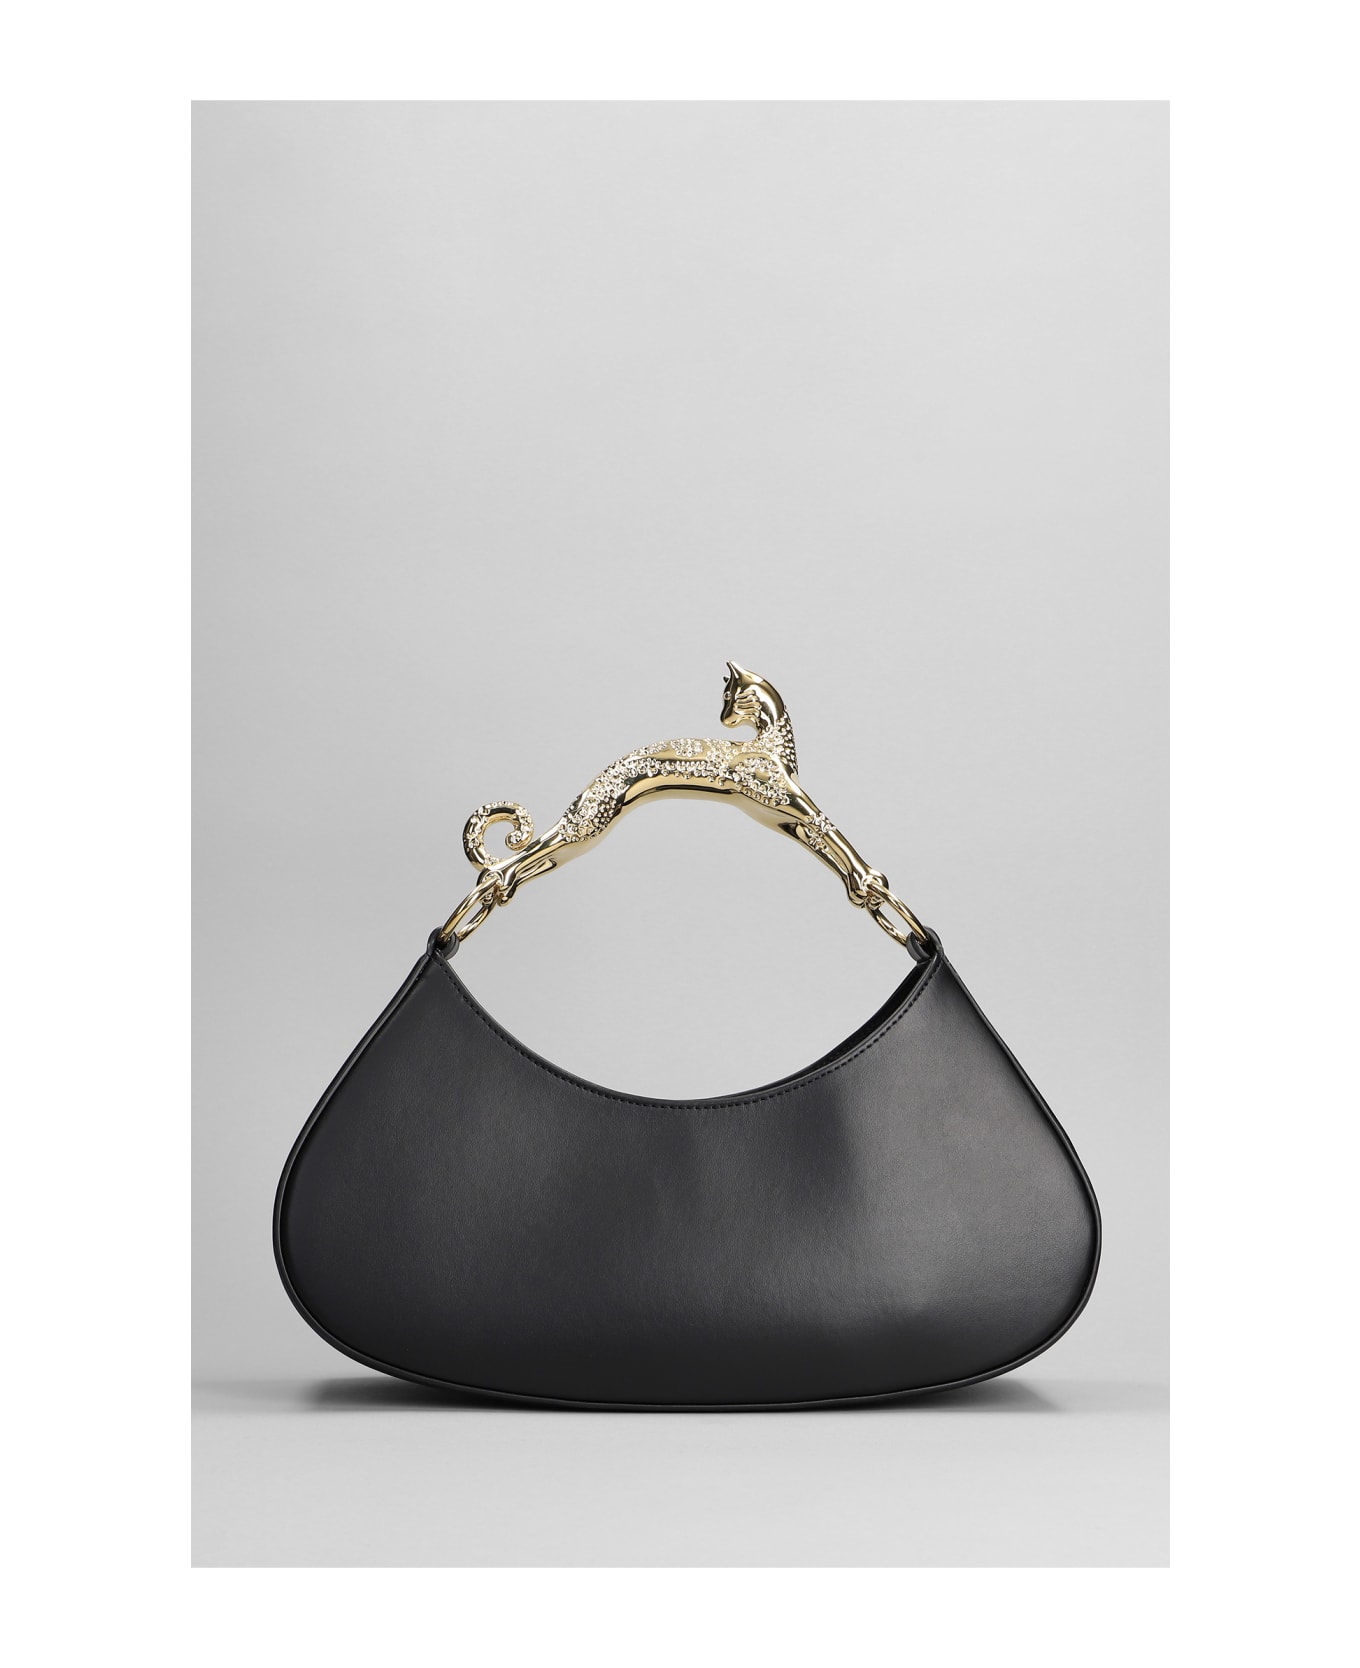 Lanvin Hobo Hand Bag In Black Leather - Black